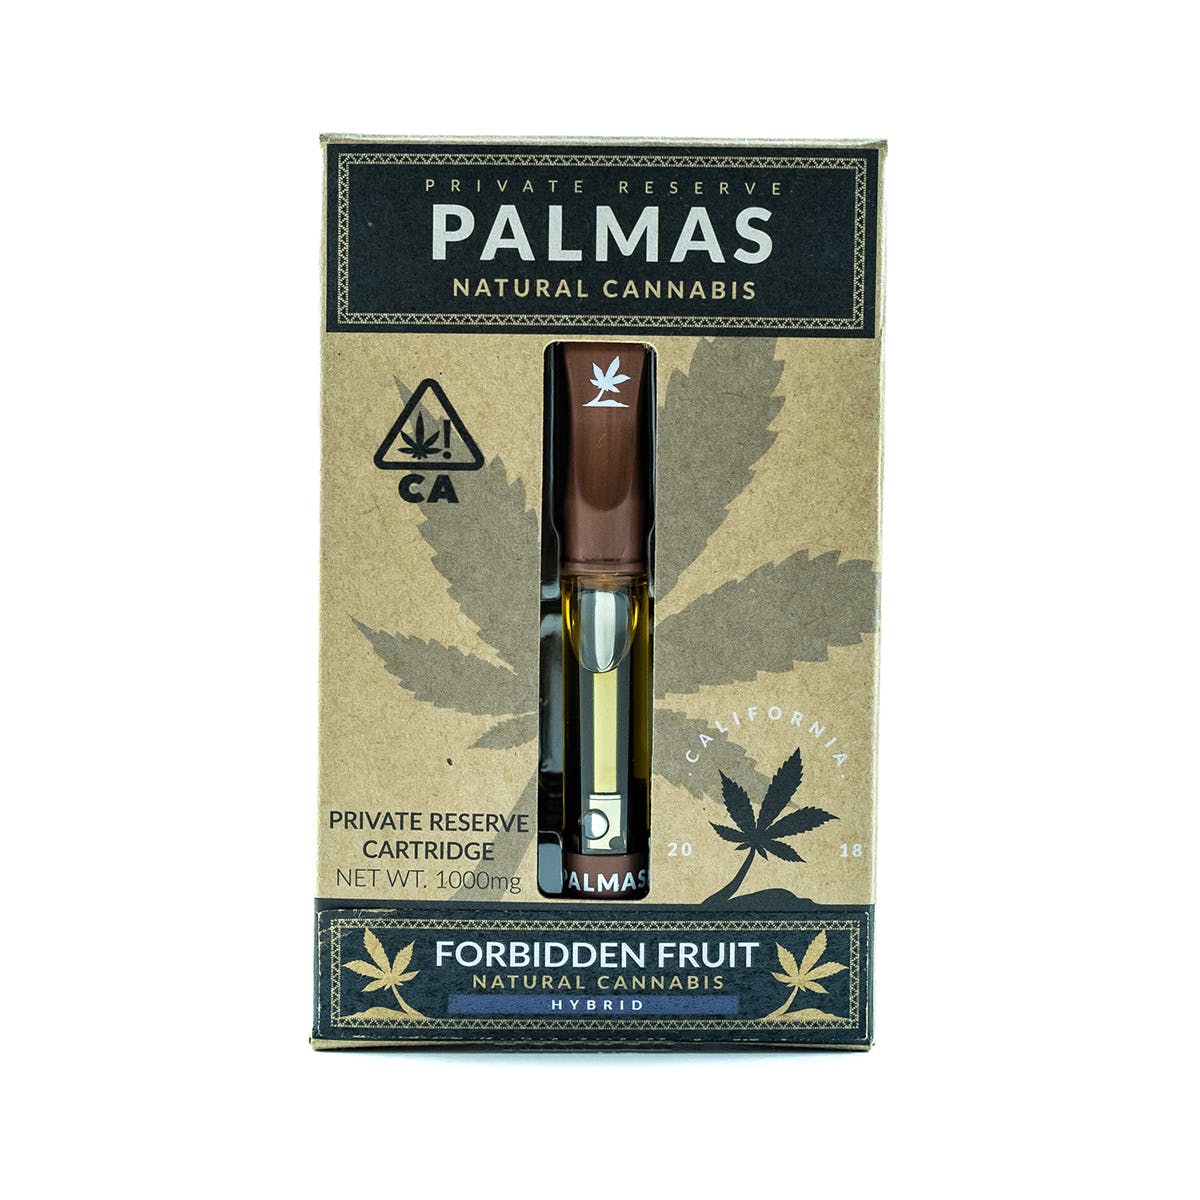 marijuana-dispensaries-kush-club-20-in-los-angeles-palmas-private-reserve-cartridge-forbidden-fruit